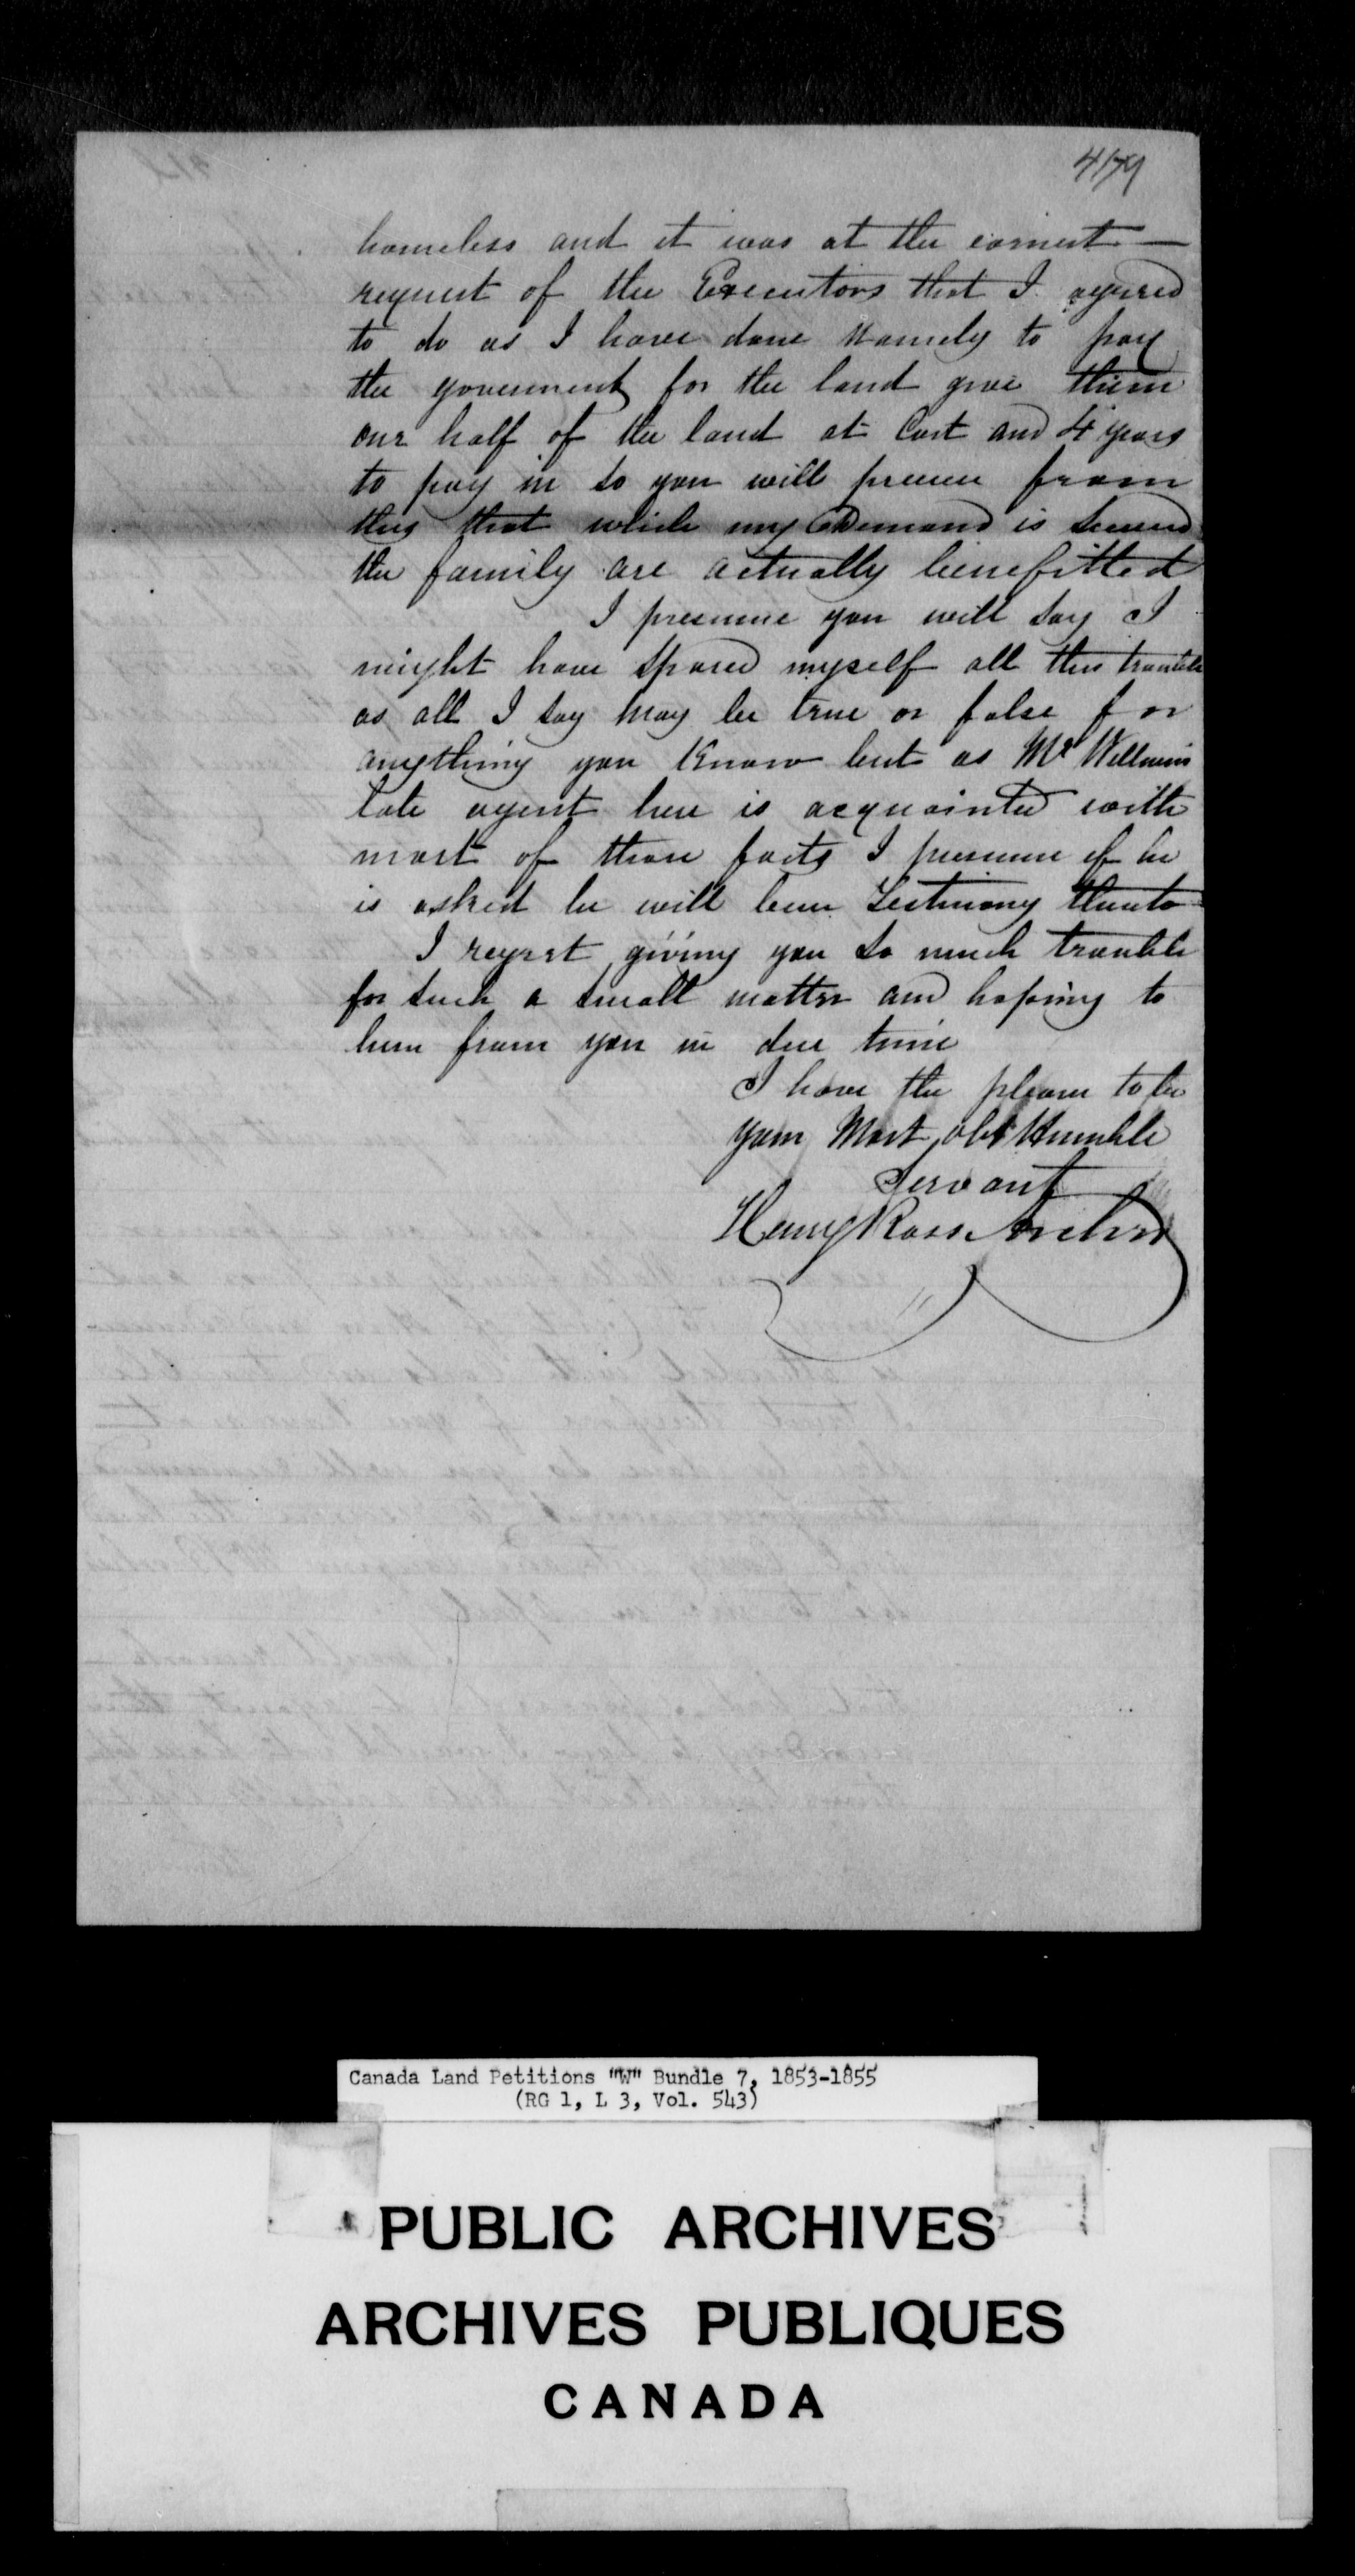 Titre : Demandes de terres du Haut-Canada (1763-1865) - N d'enregistrement Mikan : 205131 - Microforme : c-2966